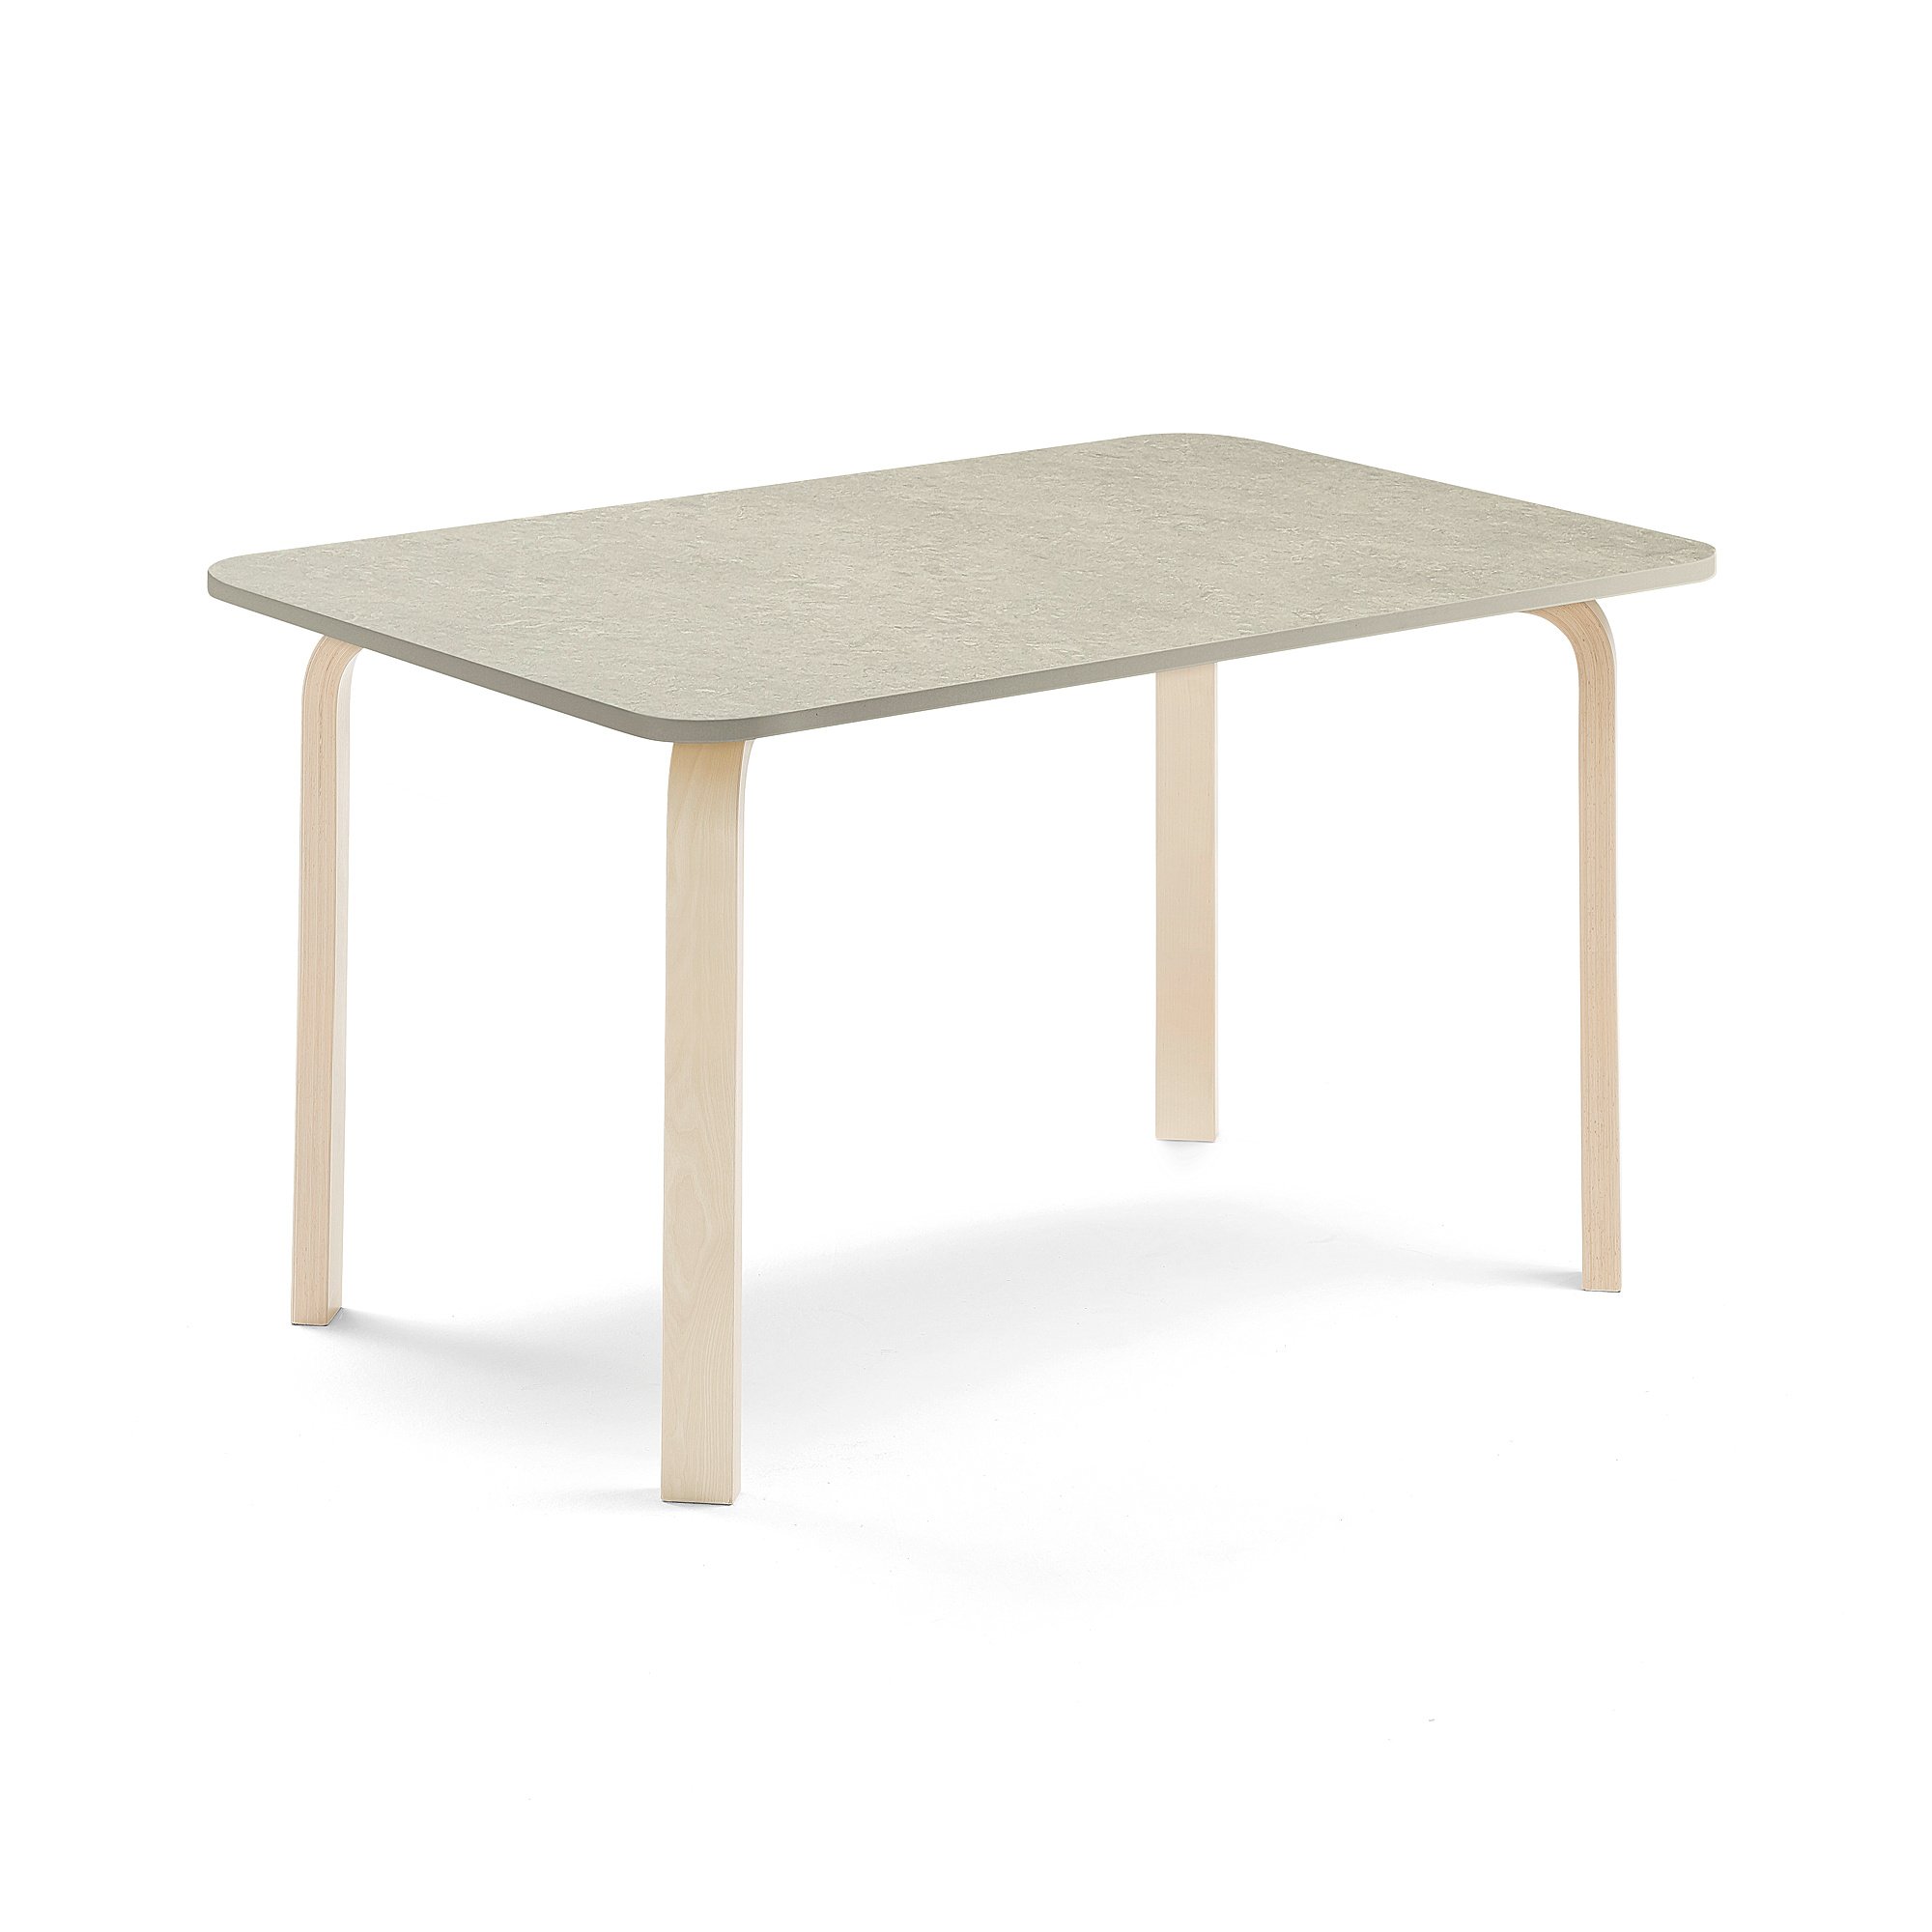 Stůl ELTON, 1200x600x640 mm, bříza, akustické linoleum, šedá